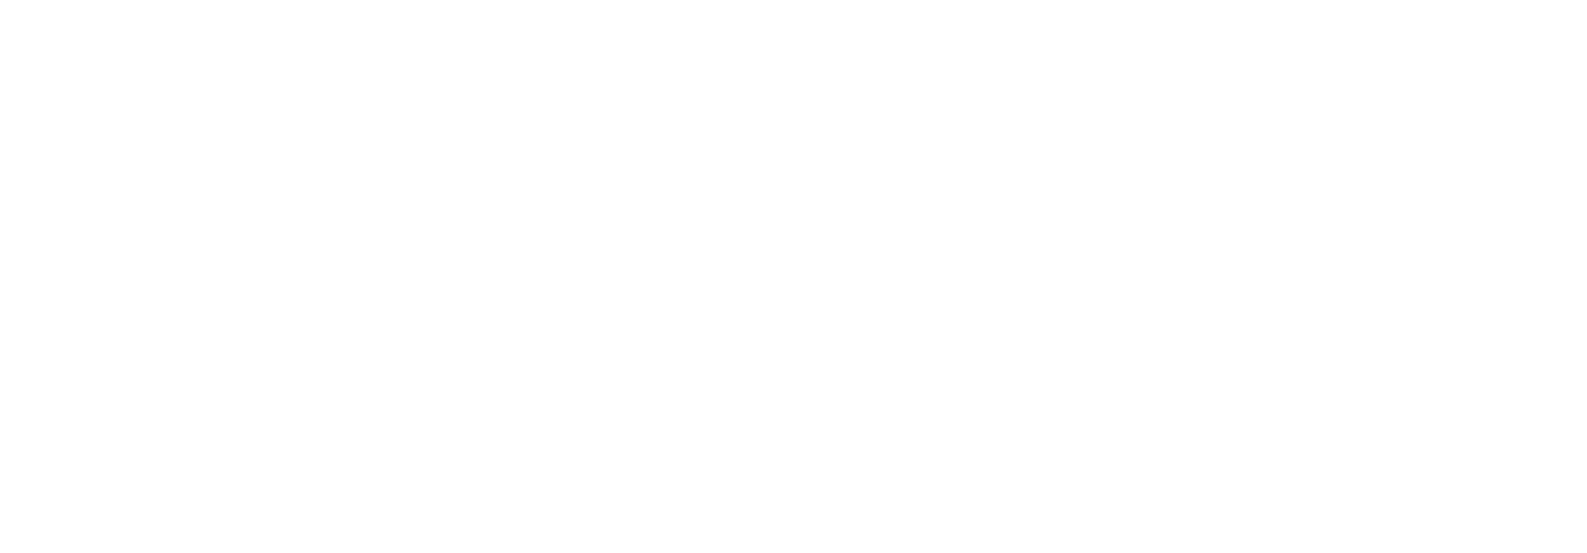 Helix Energy Solutions logo large for dark backgrounds (transparent PNG)